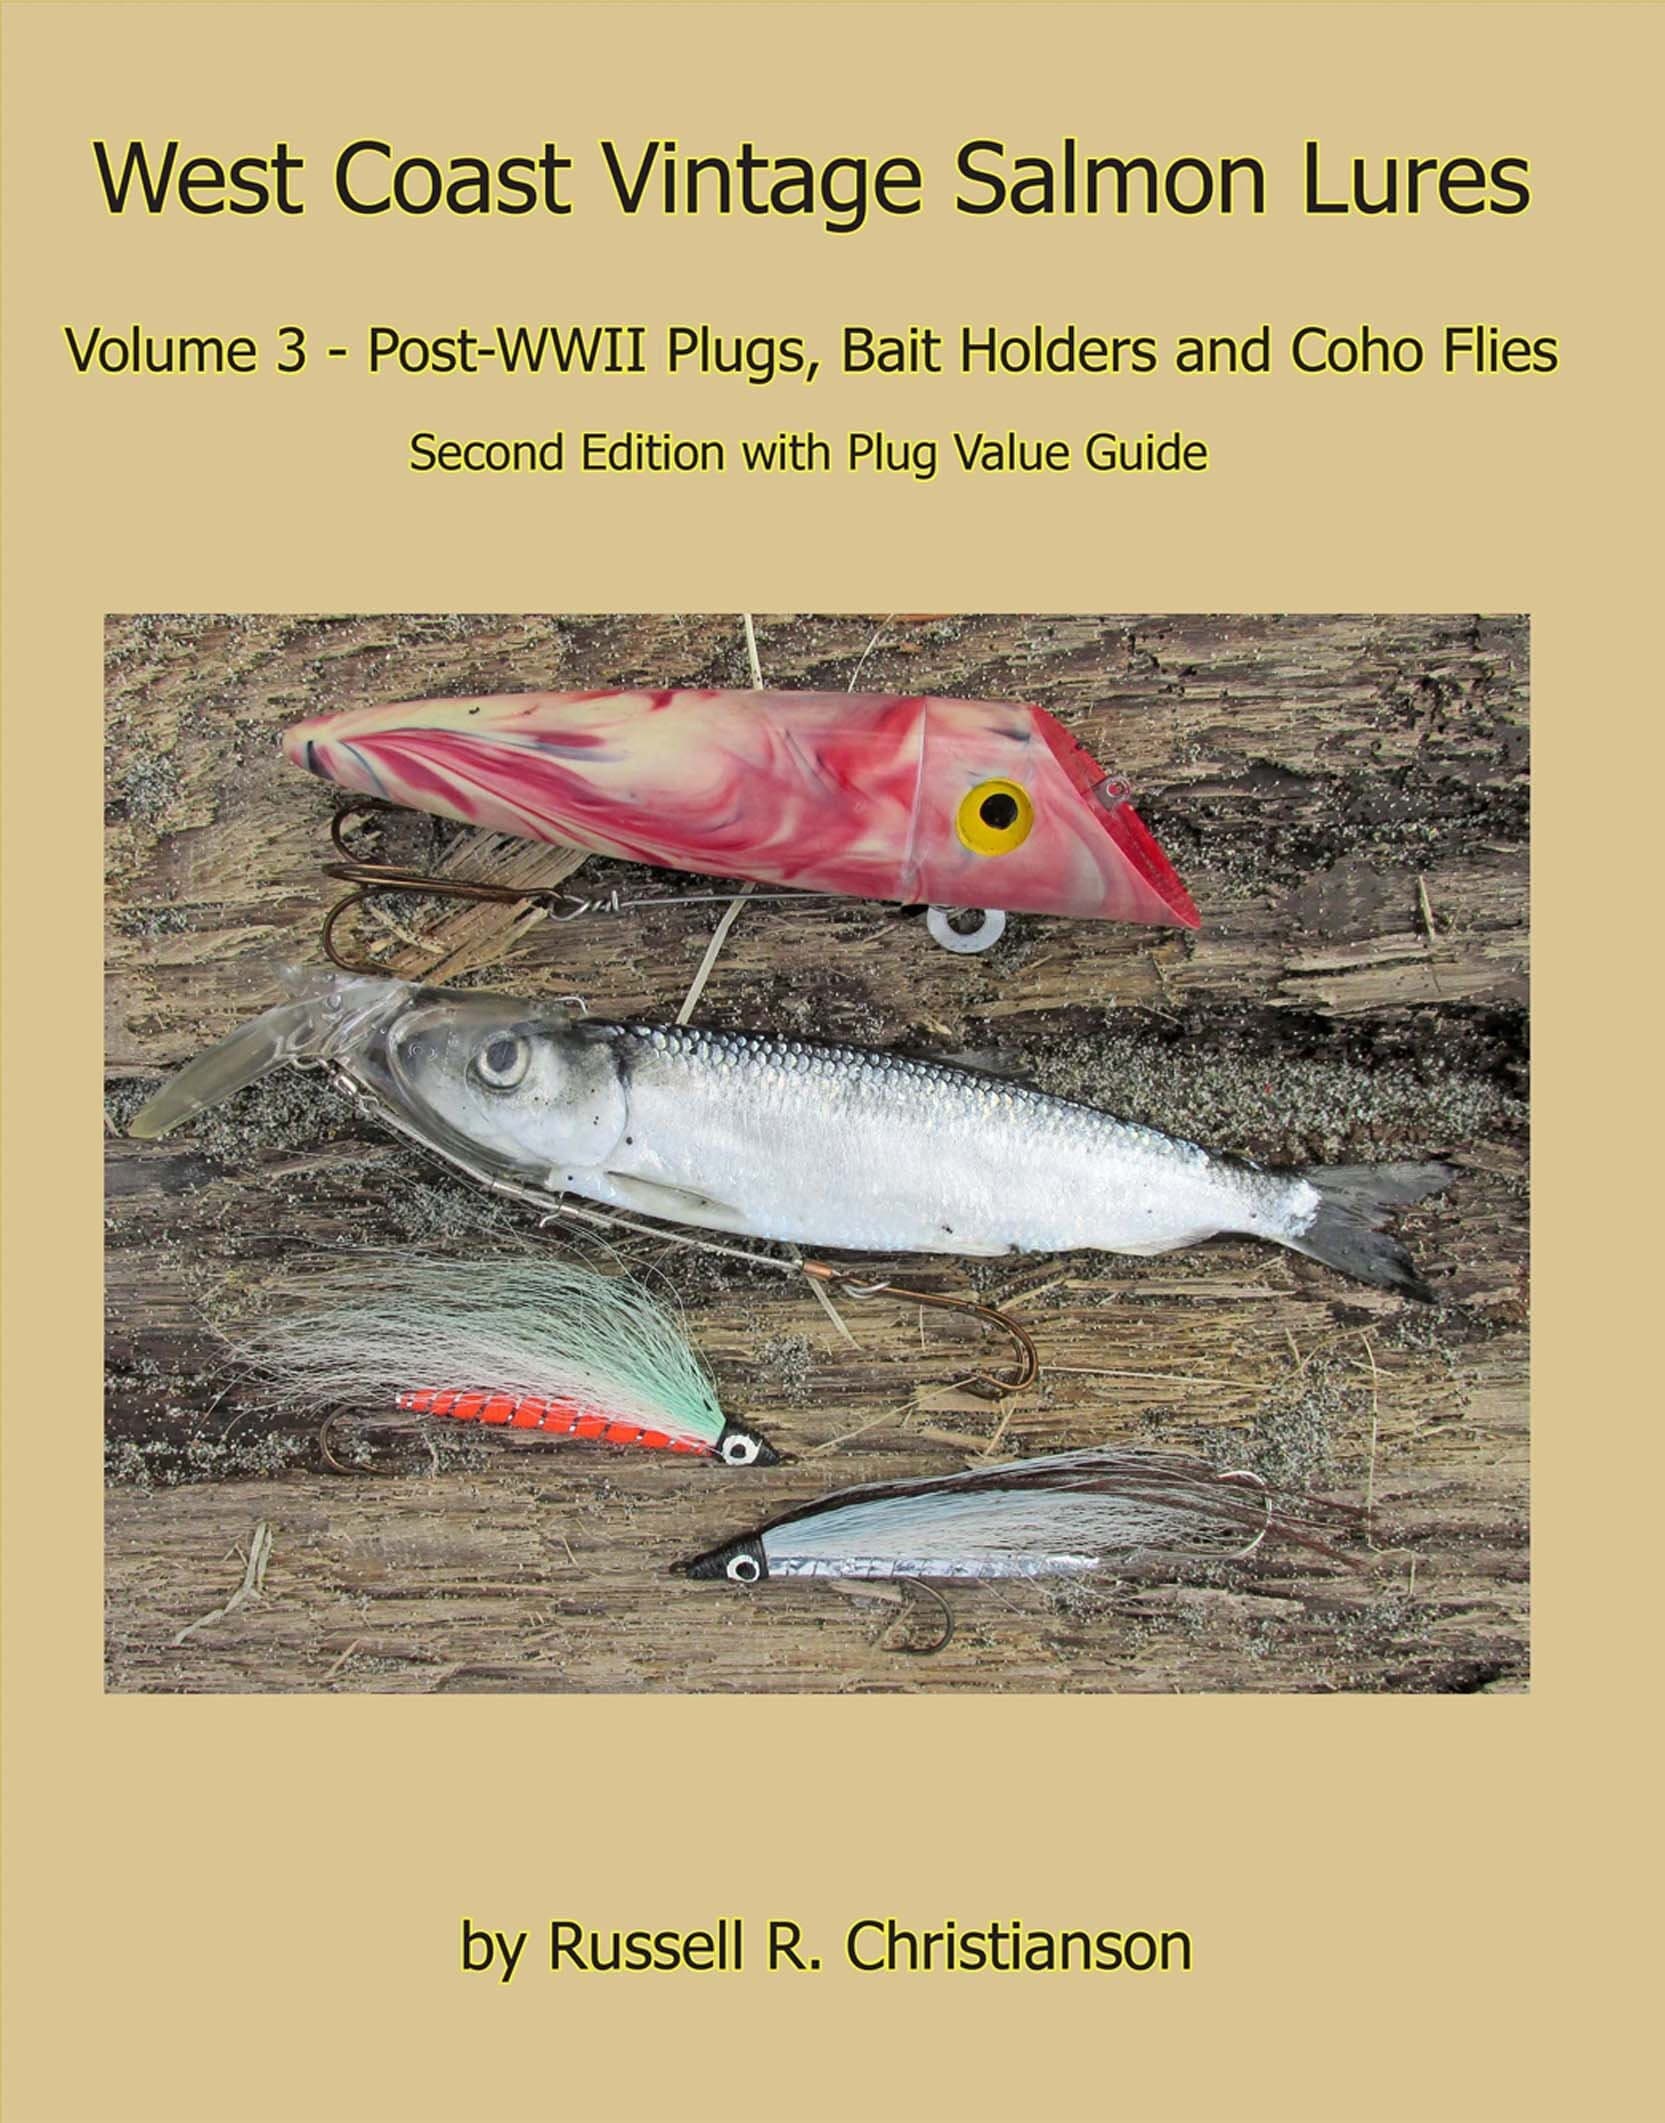 West Coast Vintage Salmon Lures, Vol. 3 Post-wwii Plugs, Bait